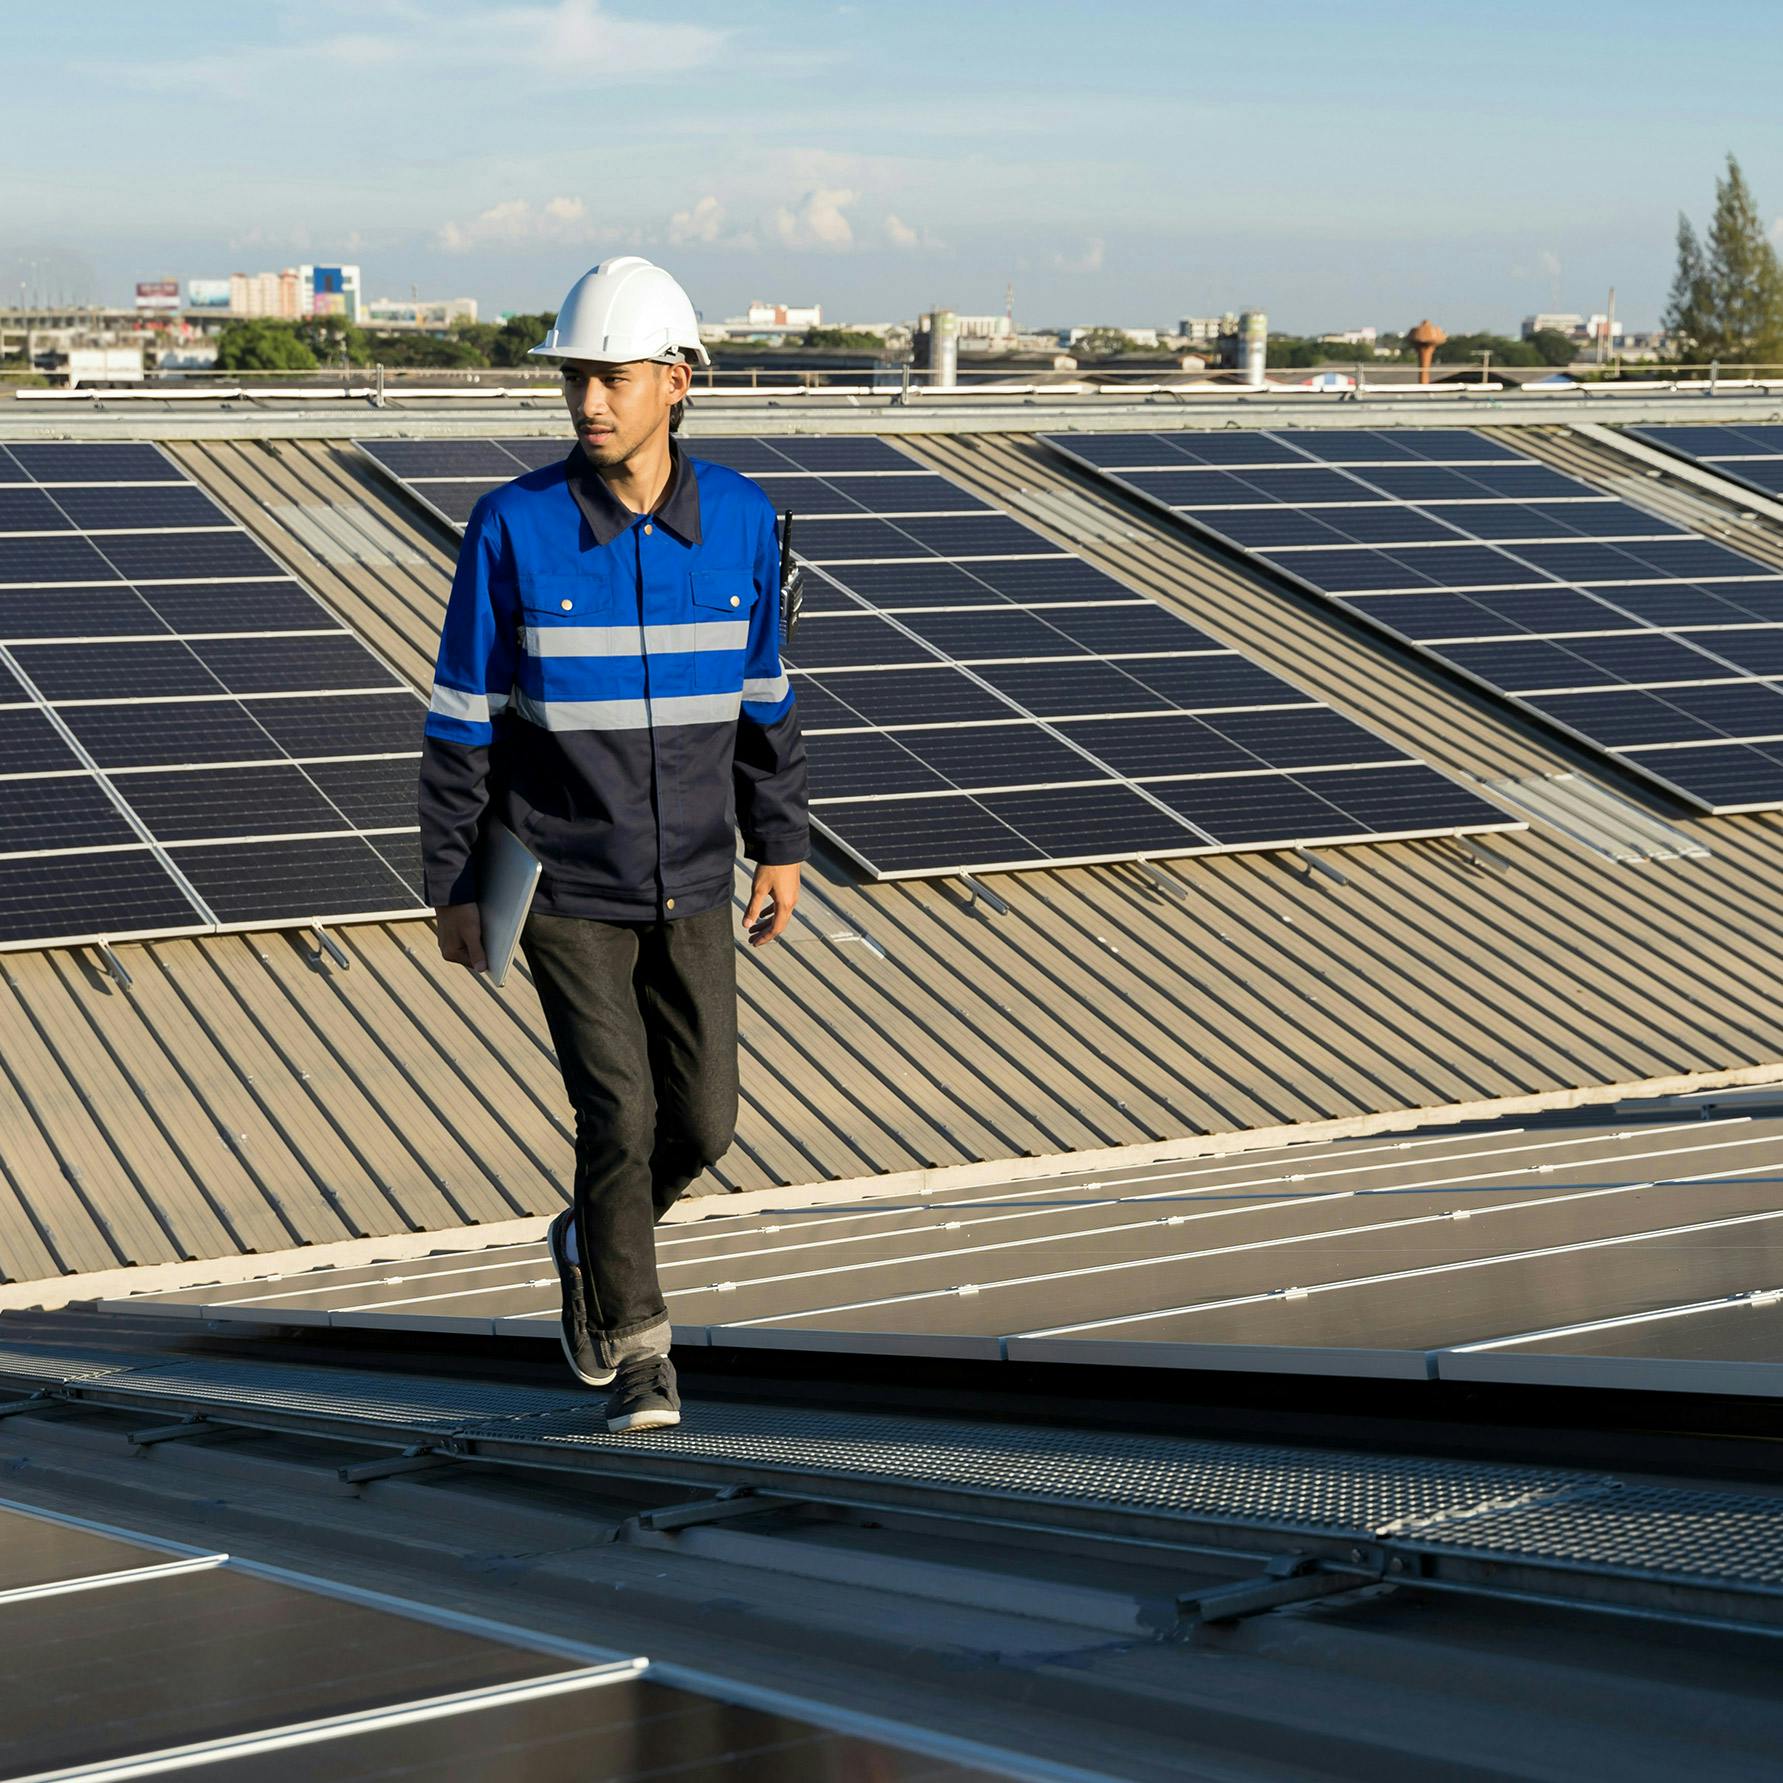 Solar installer walking across roof with panels